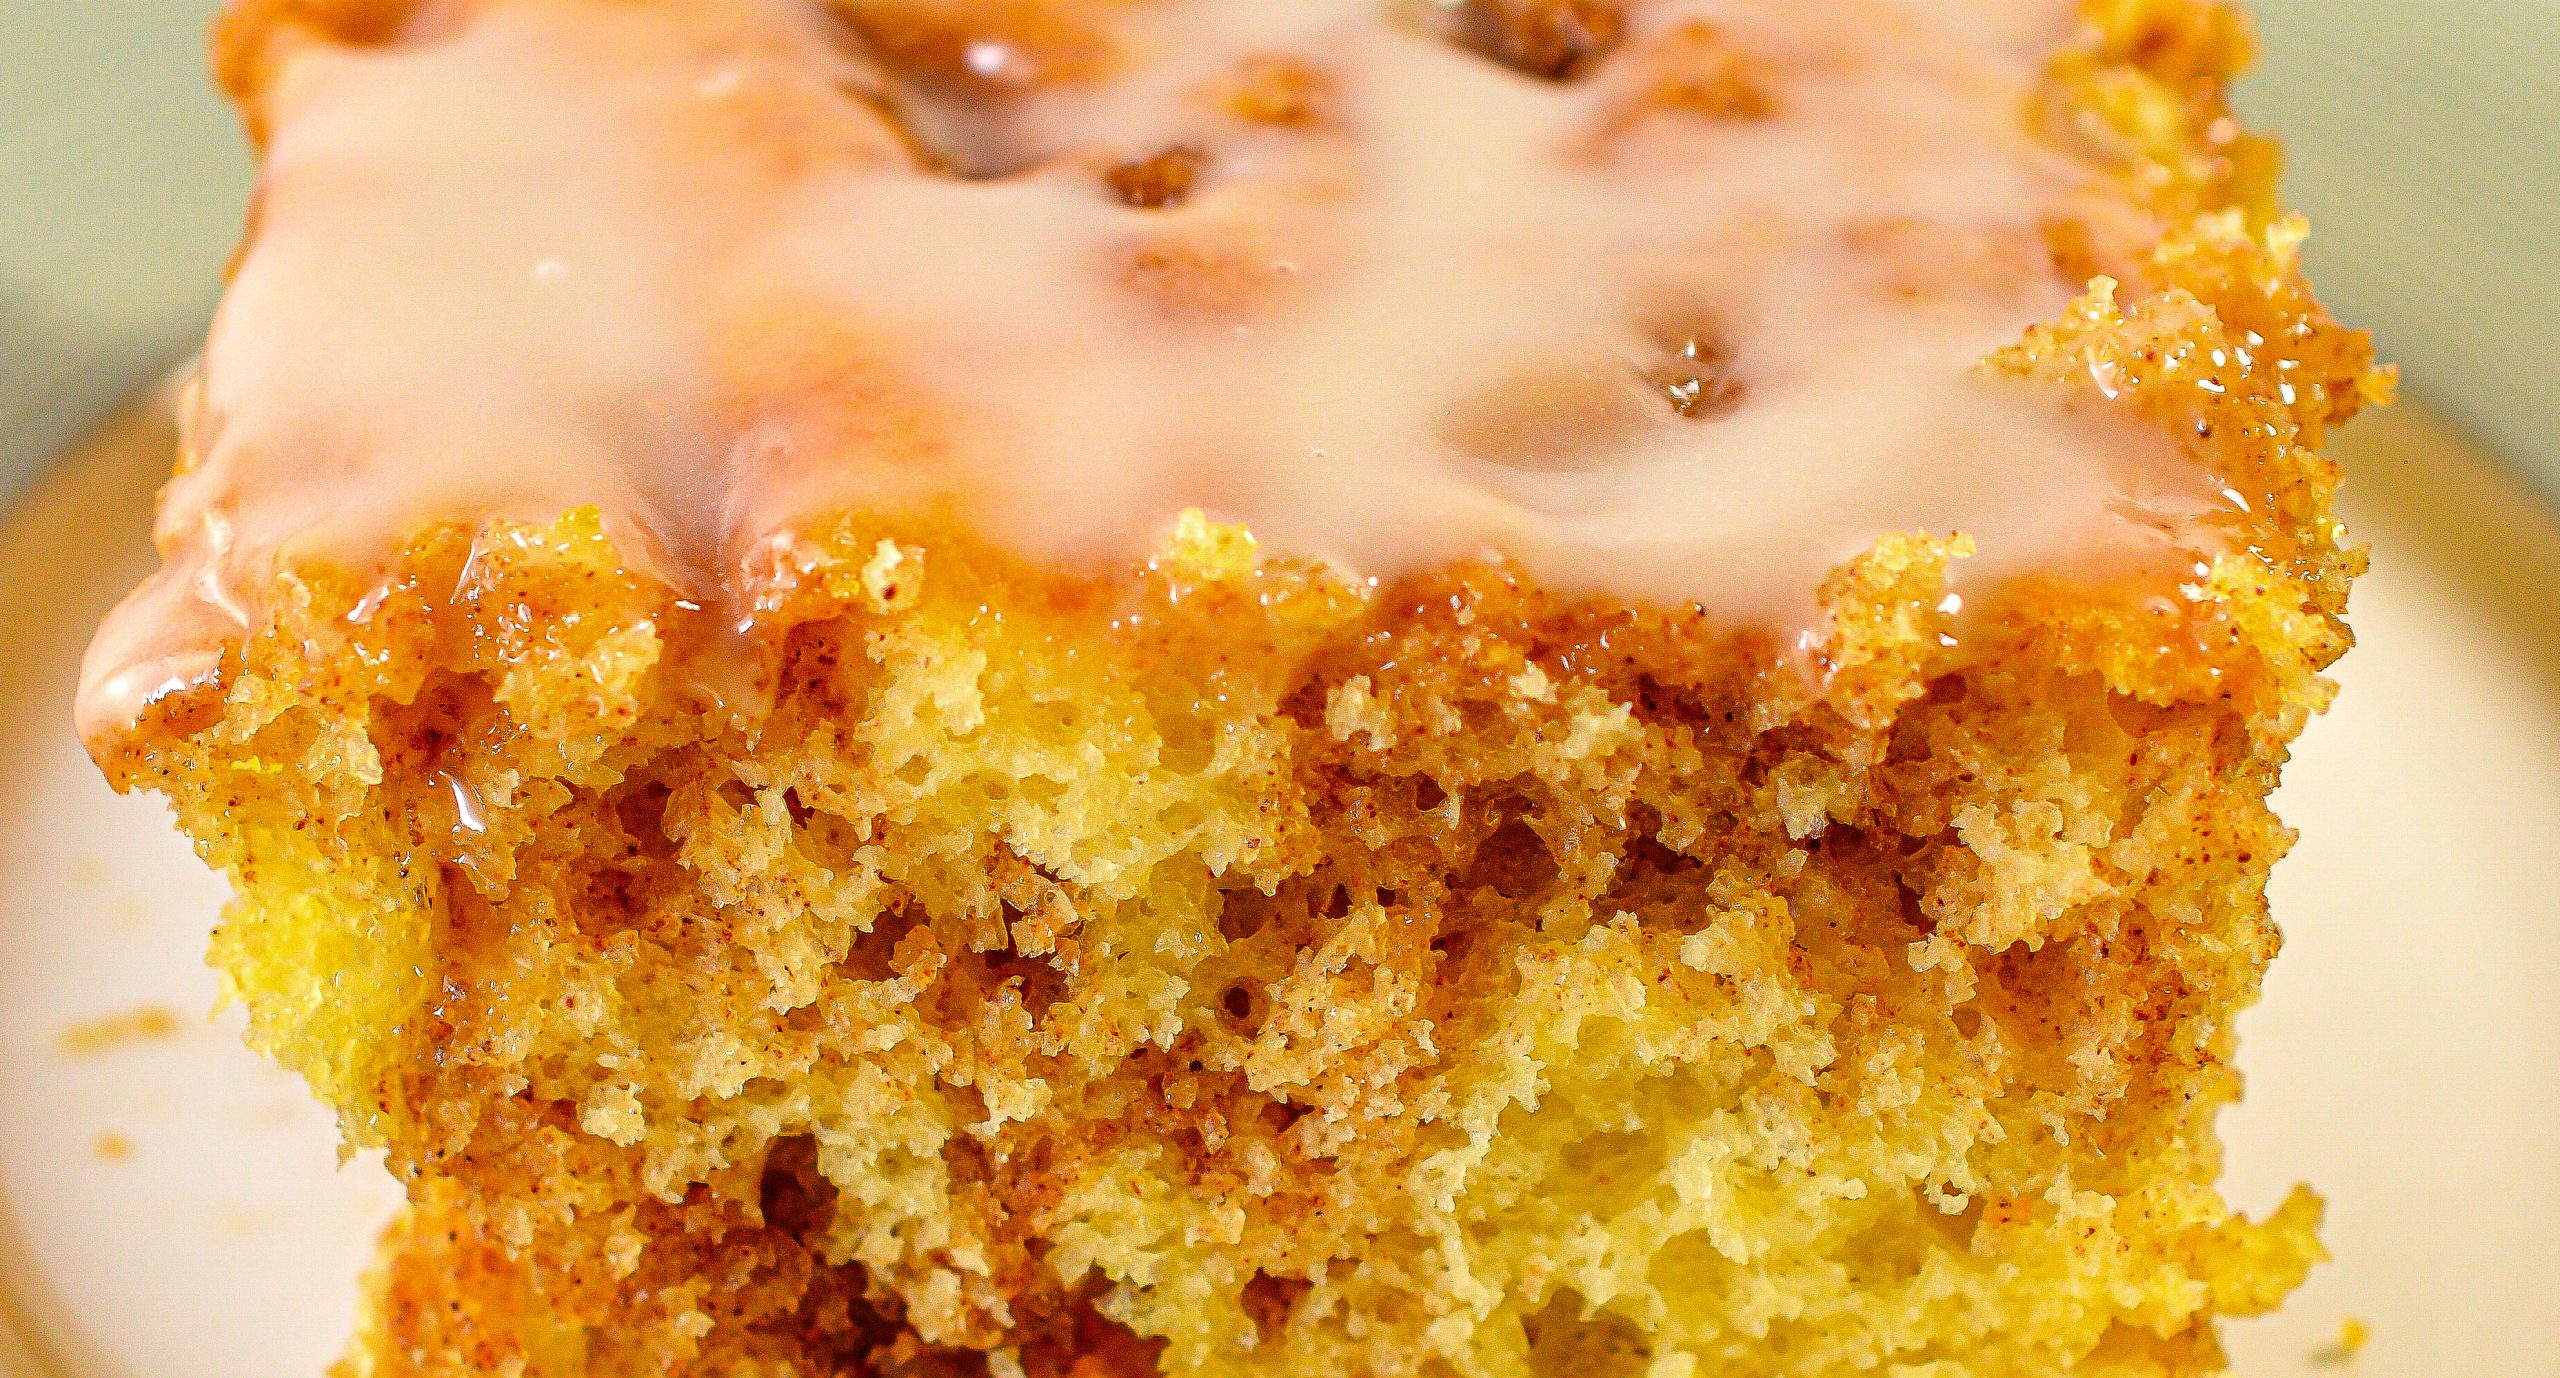 Honey Apple Bundt Cake to Bake Using Your Wolf Appliances